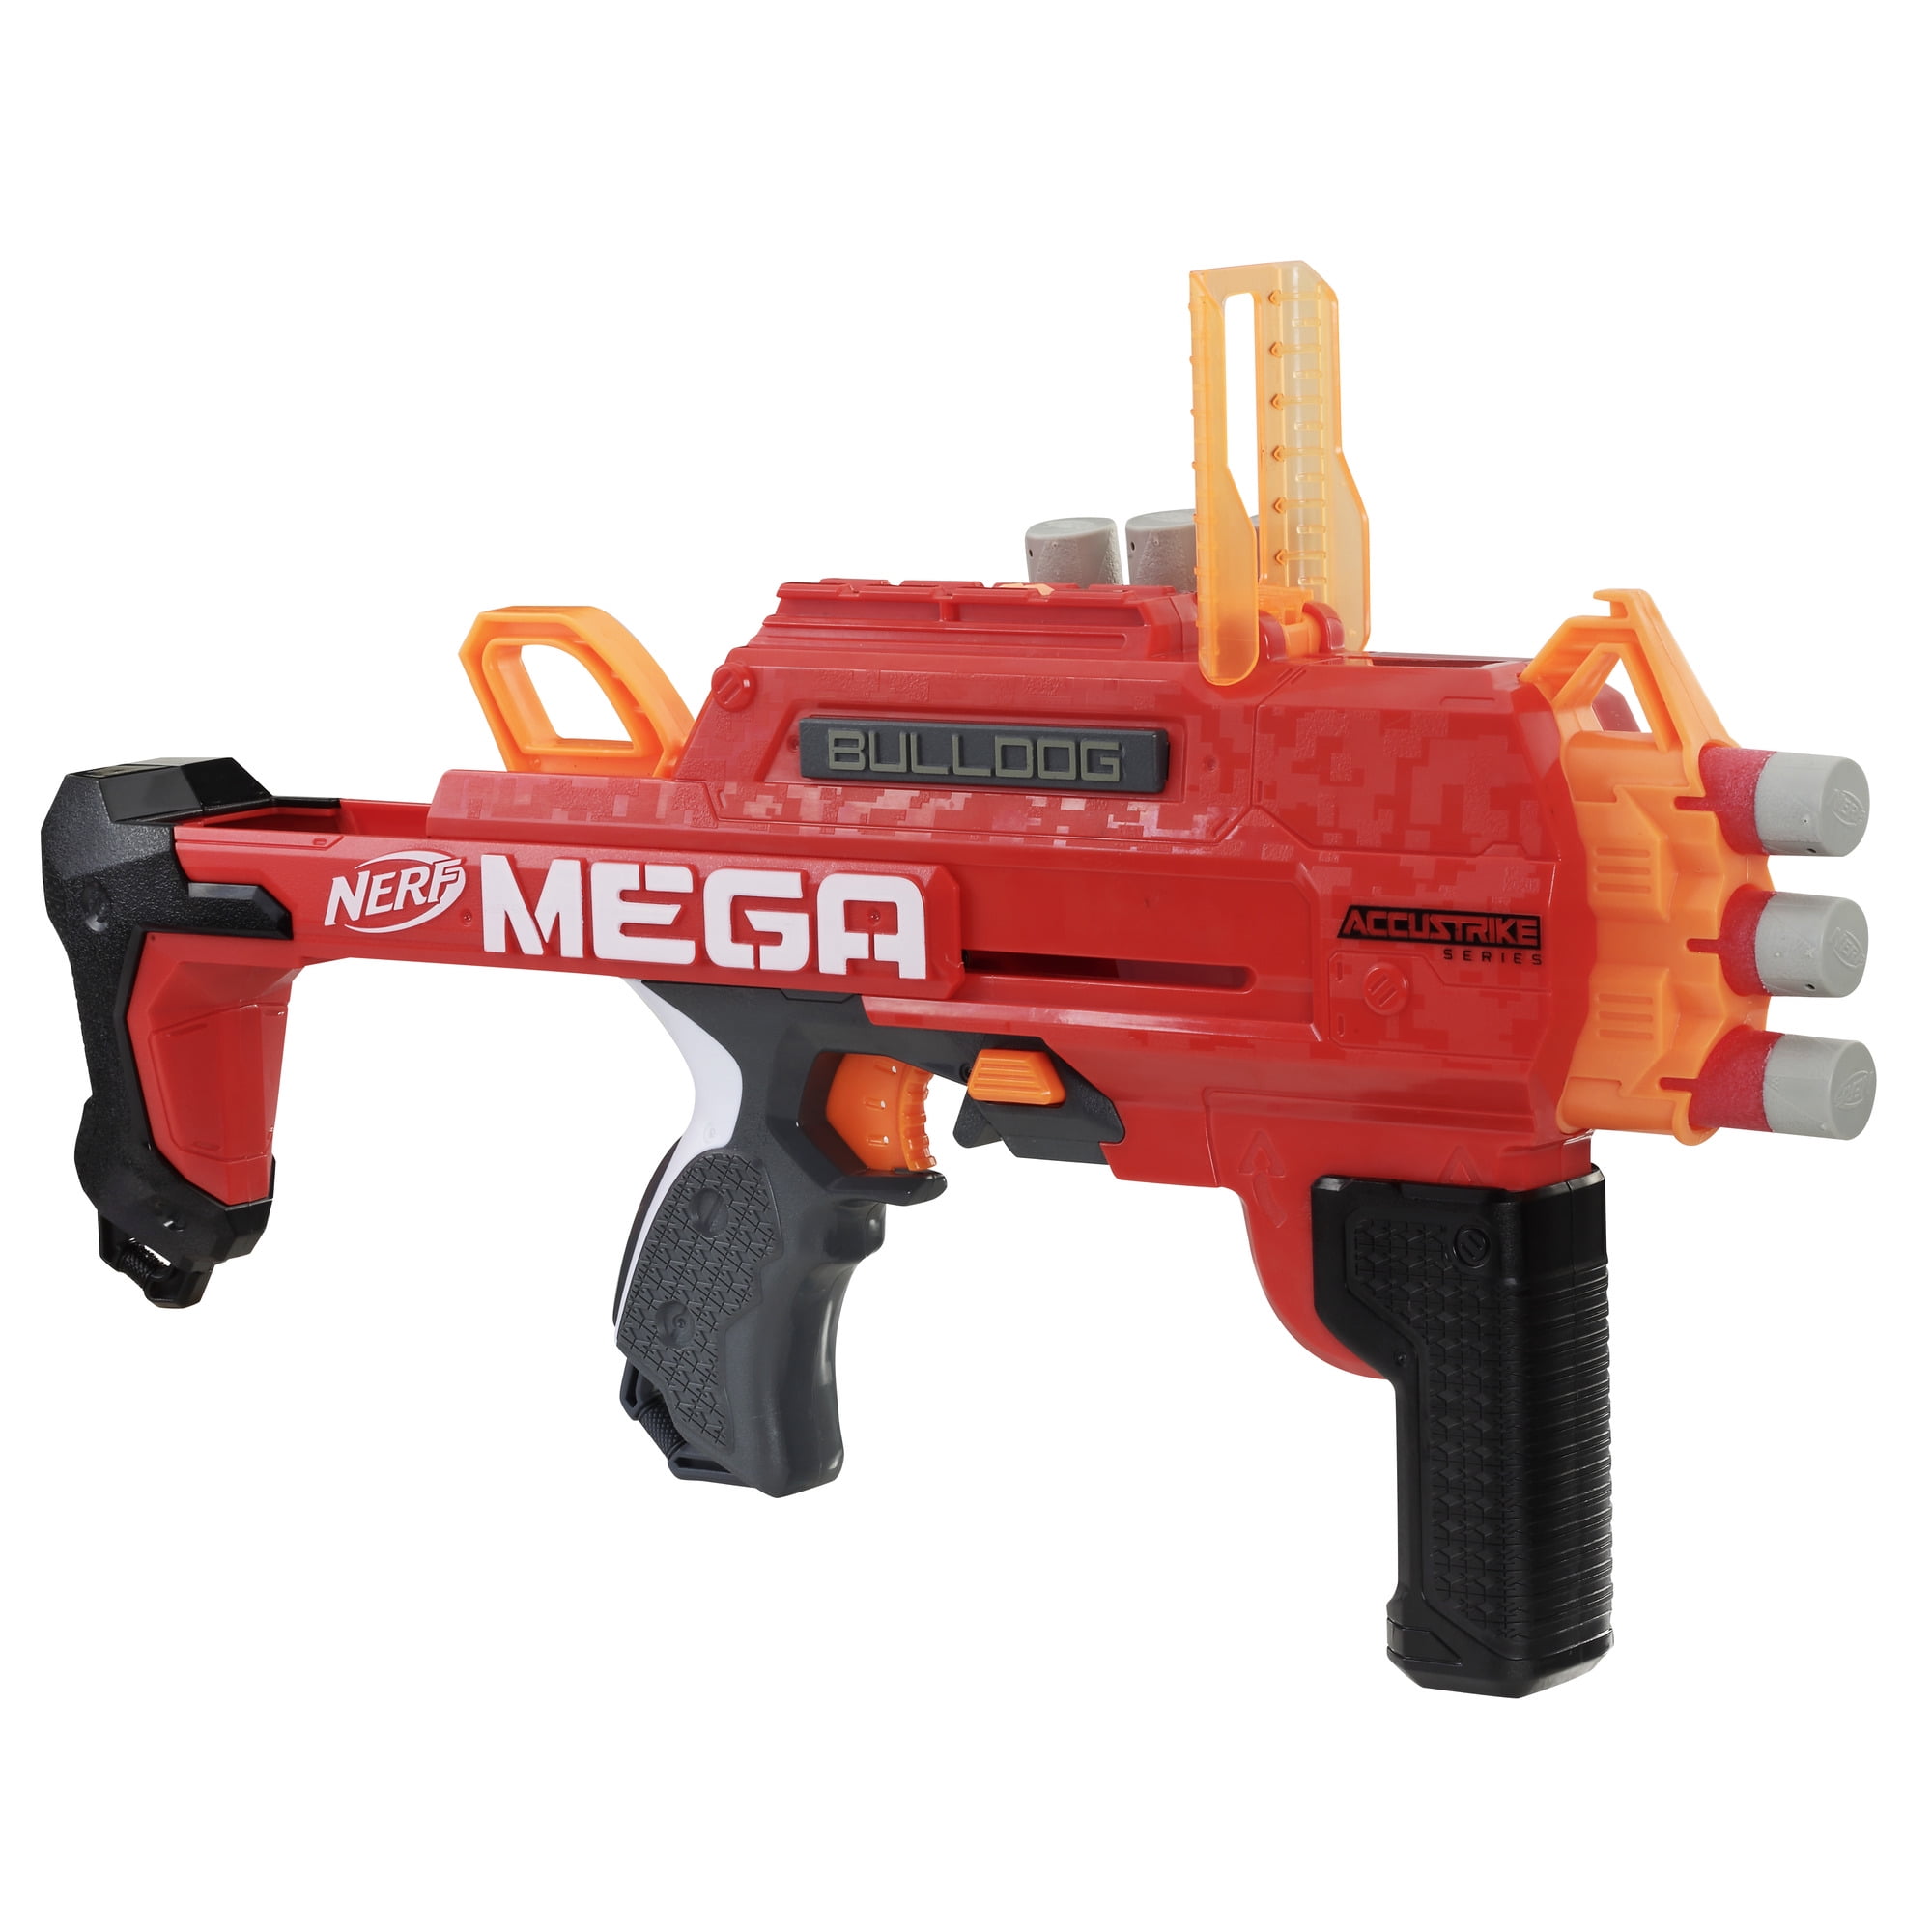 Nerf Accustrike Mega Bulldog Blaster